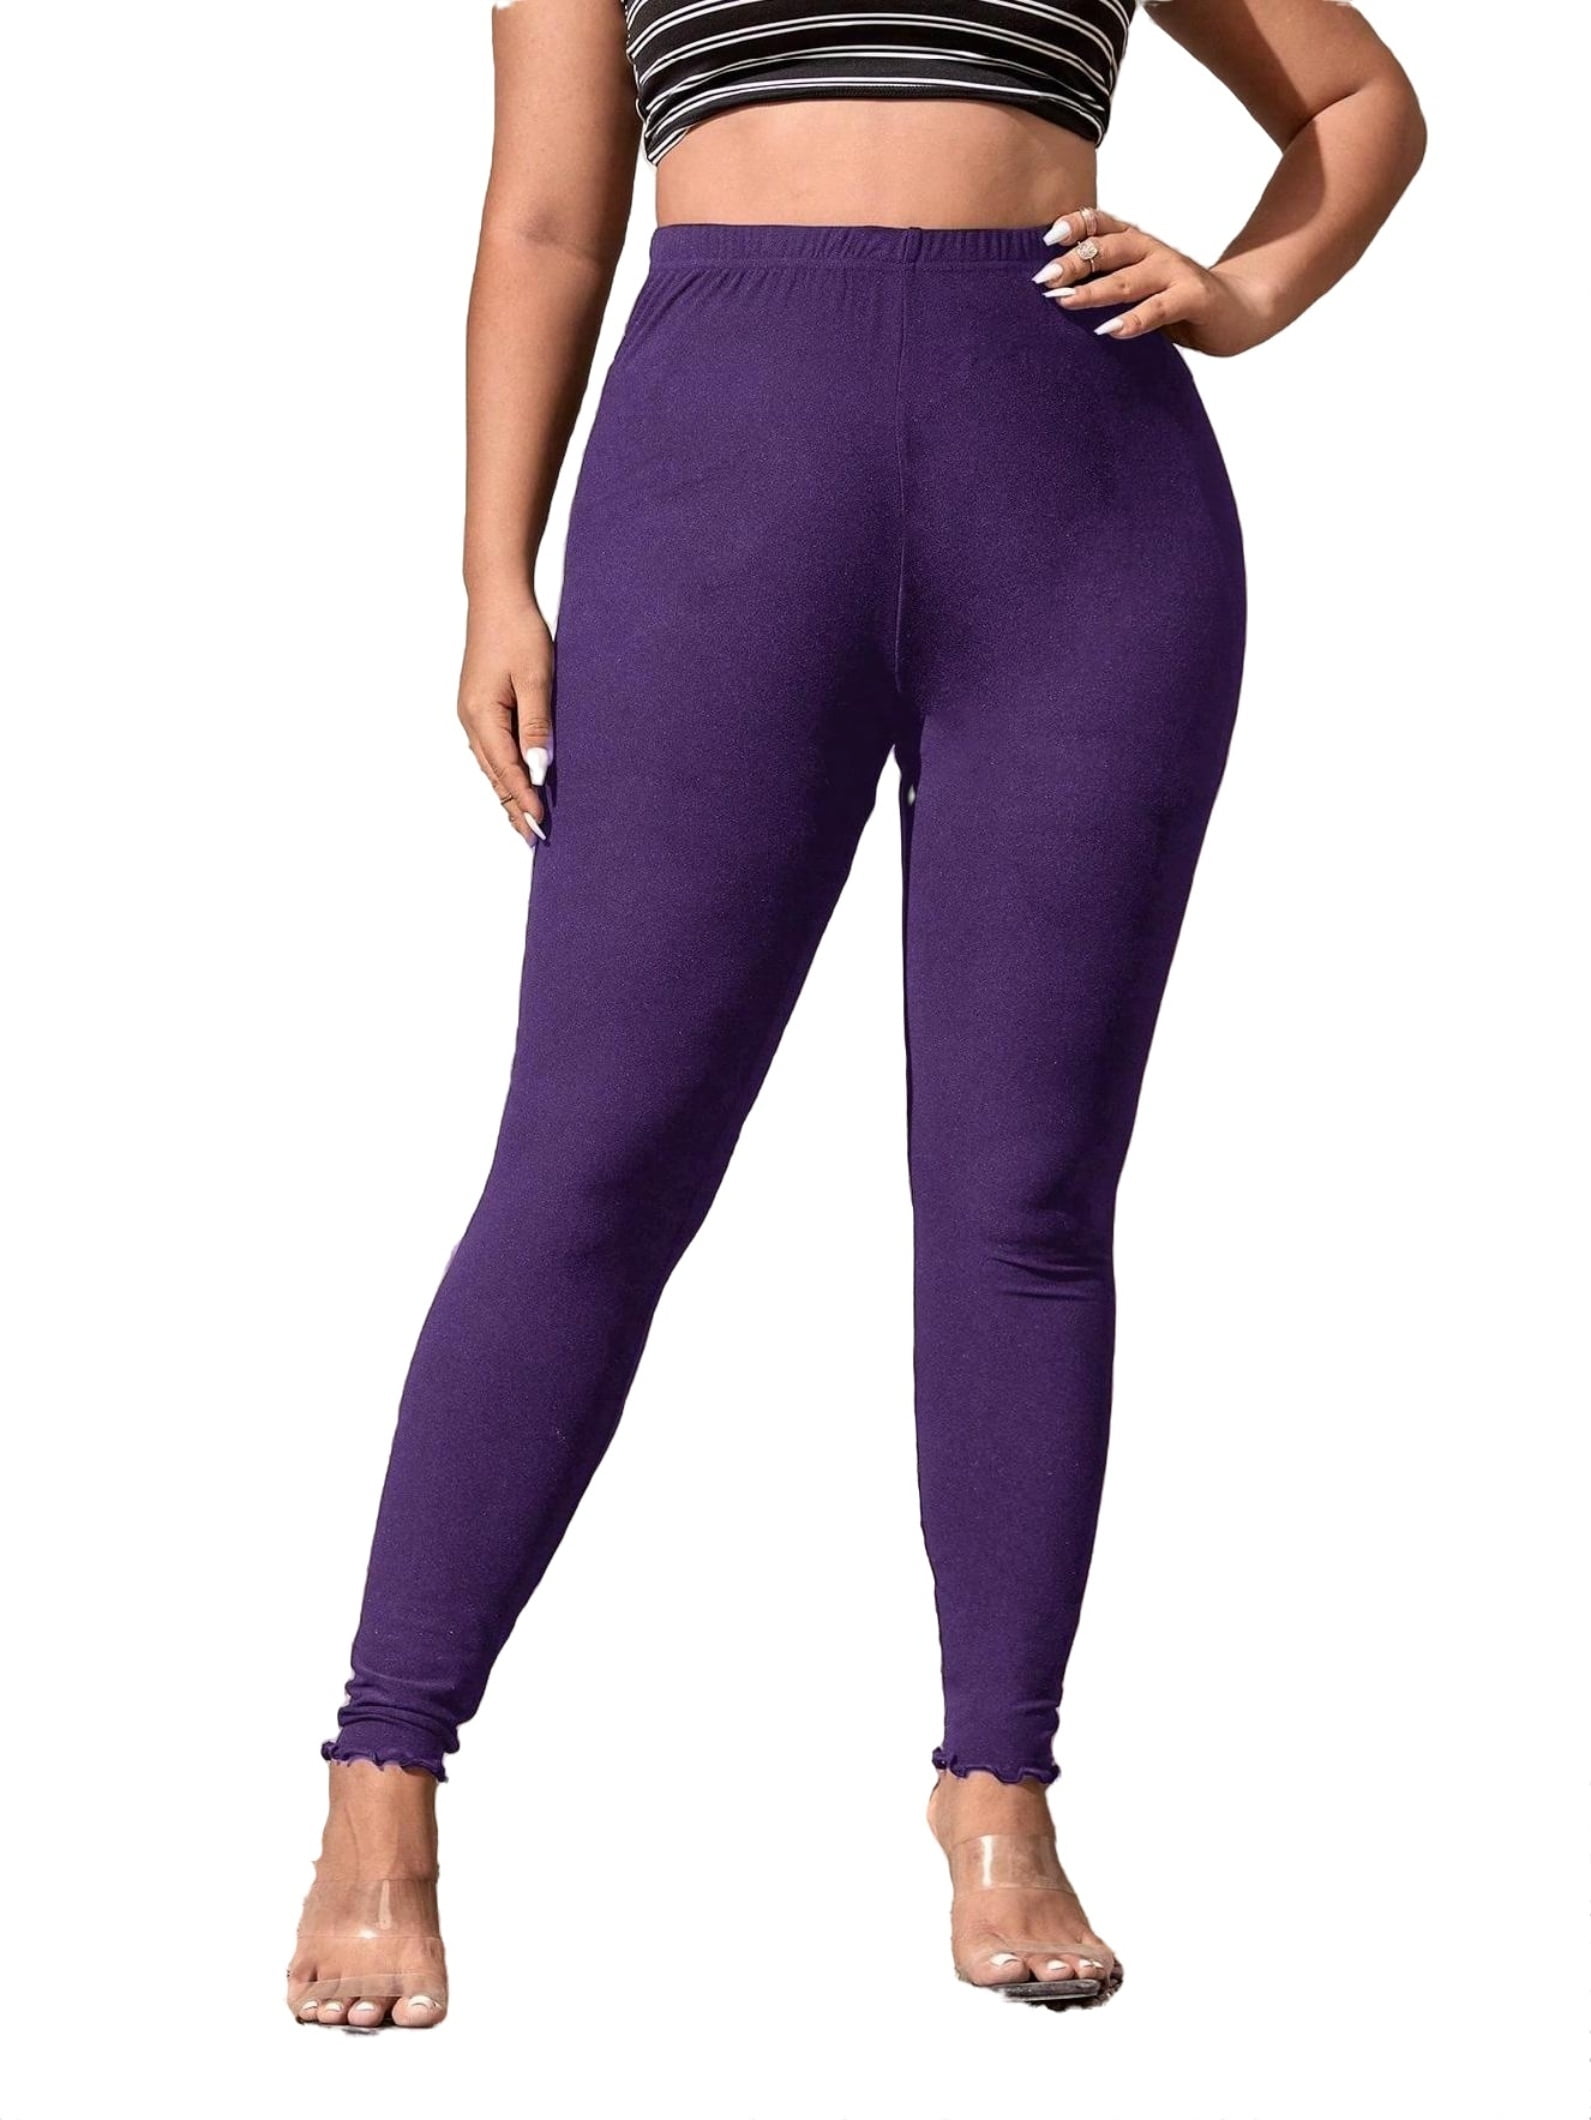 Casual Solid Regular Violet Purple Plus Size Leggings (Women's